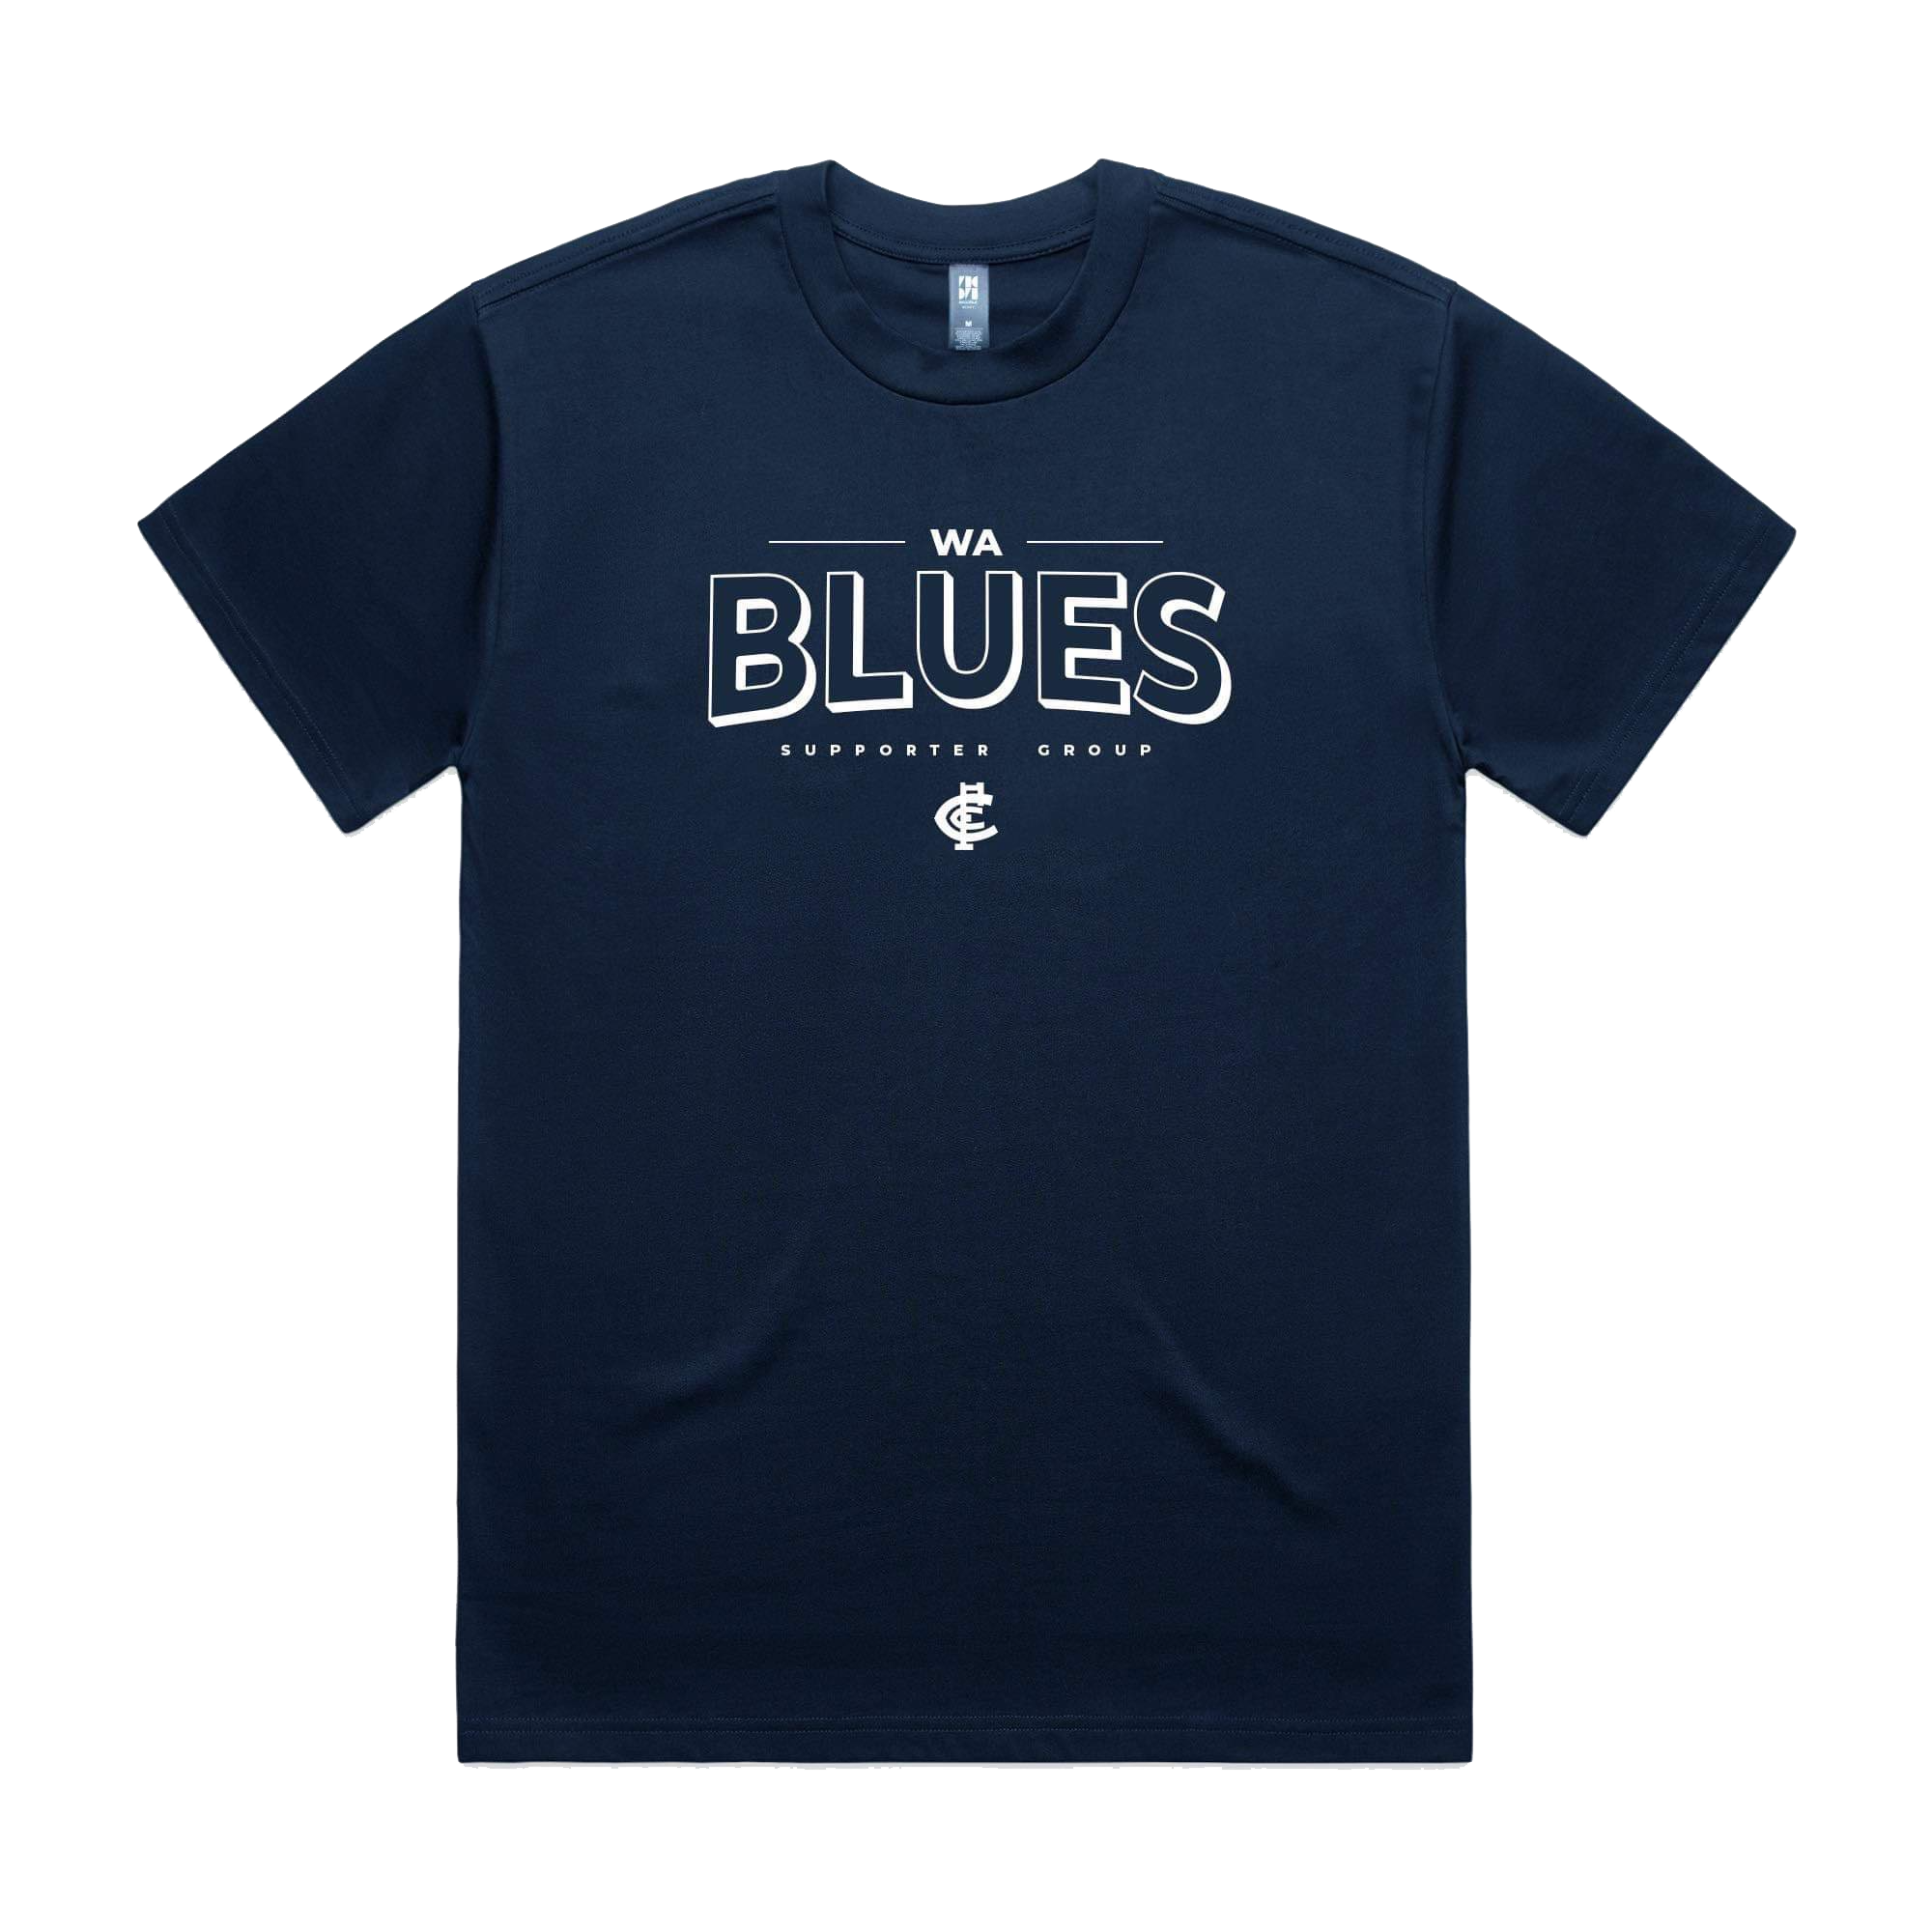 https://www.wablues.com/wp-content/uploads/2024/02/wa-blues-shirt-transparent.png